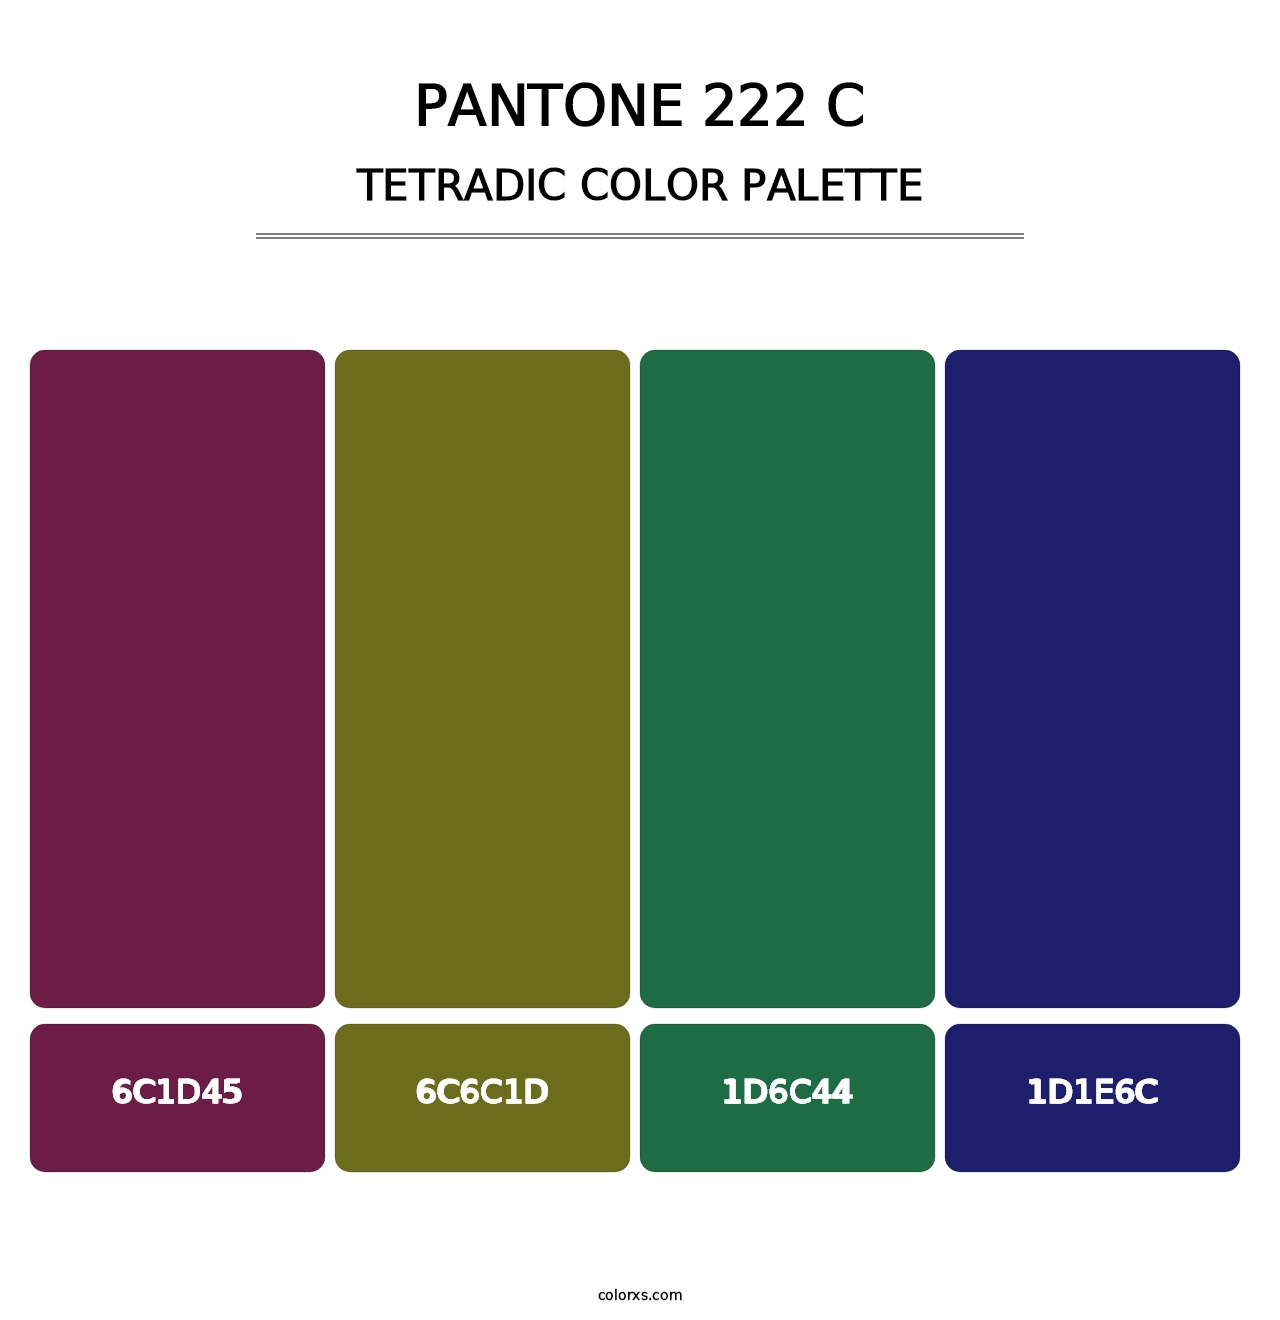 PANTONE 222 C - Tetradic Color Palette